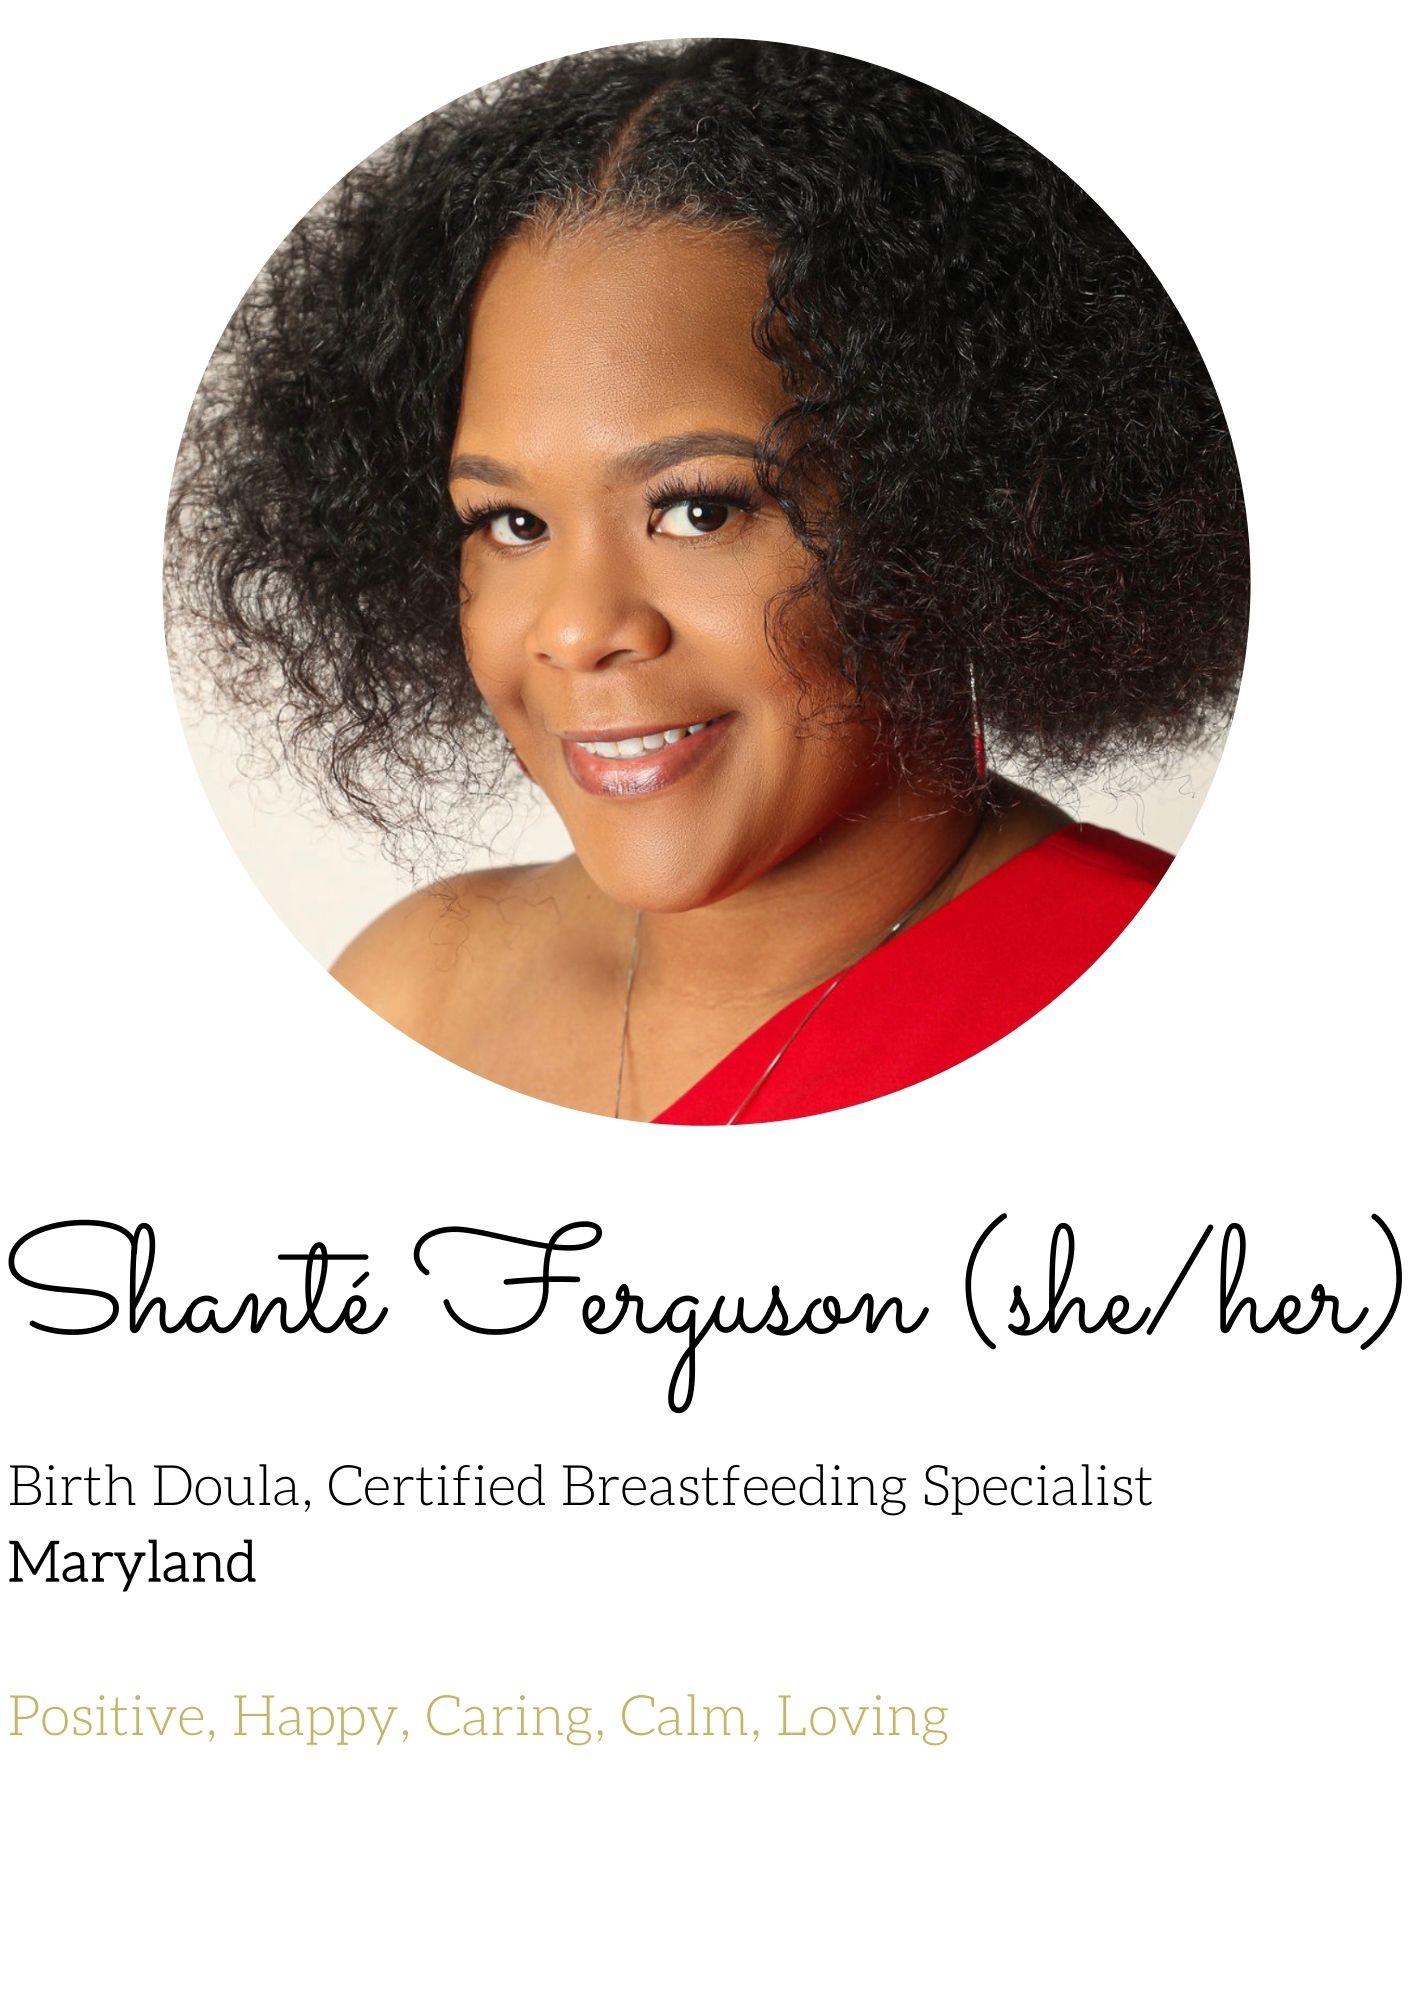 Shante Ferguson she/her birth doula breastfeeding specialist Maryland positive happy caring calm loving